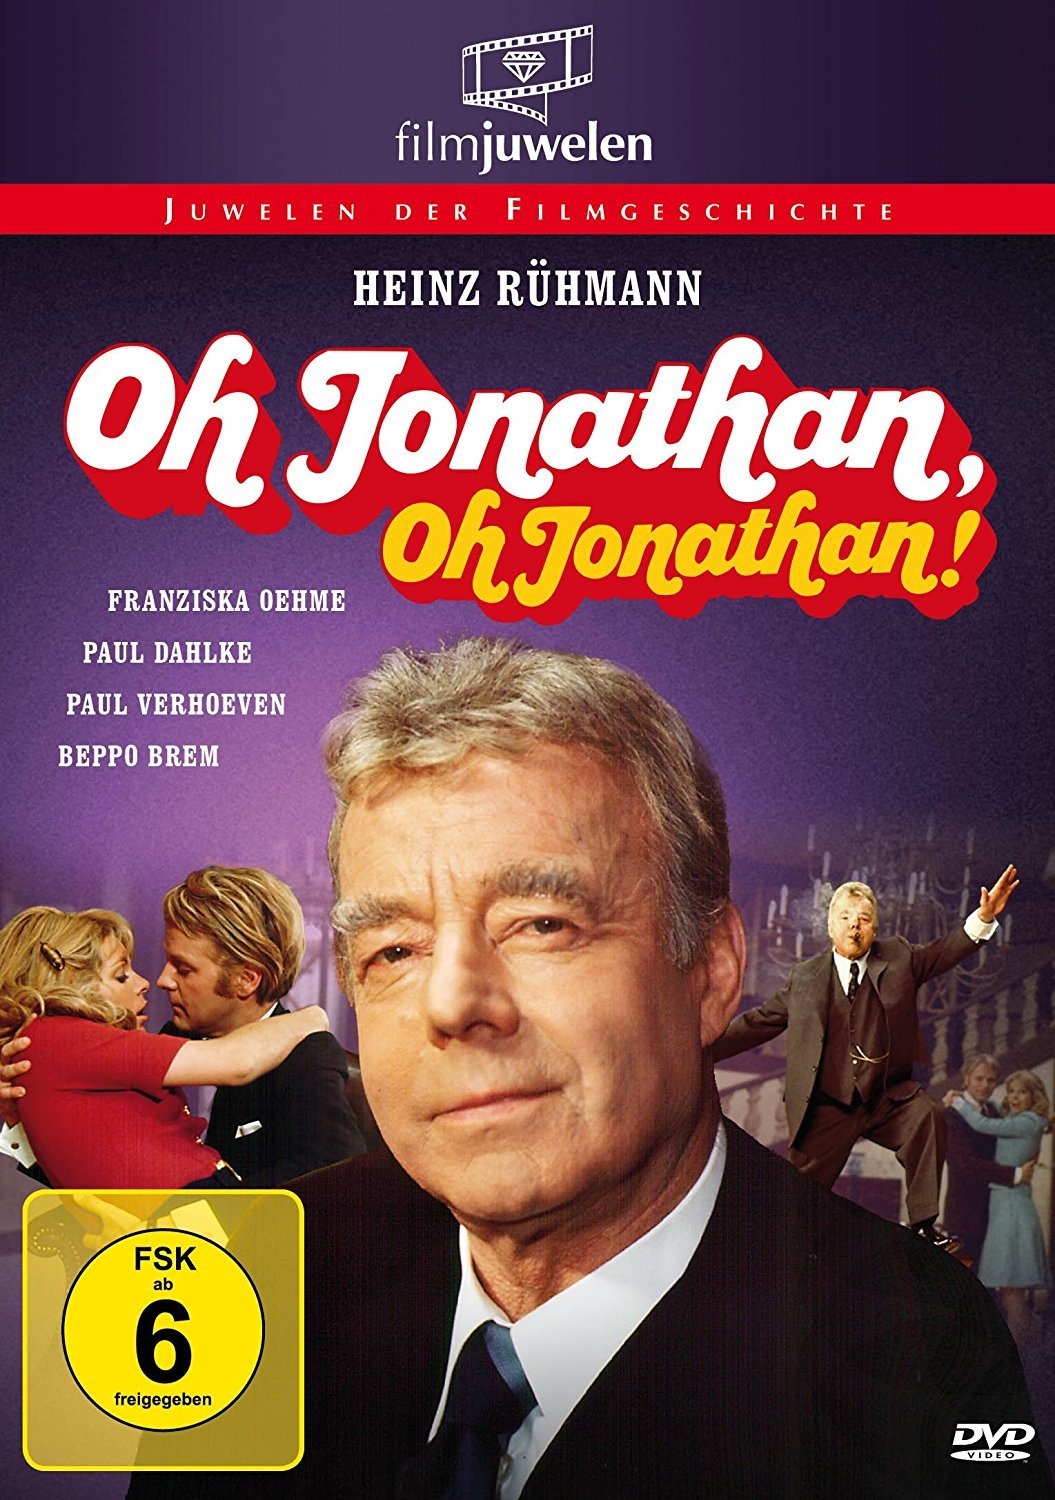 Heinz Rühmann: Oh Jonathan  Oh Jonathan! (DVD)